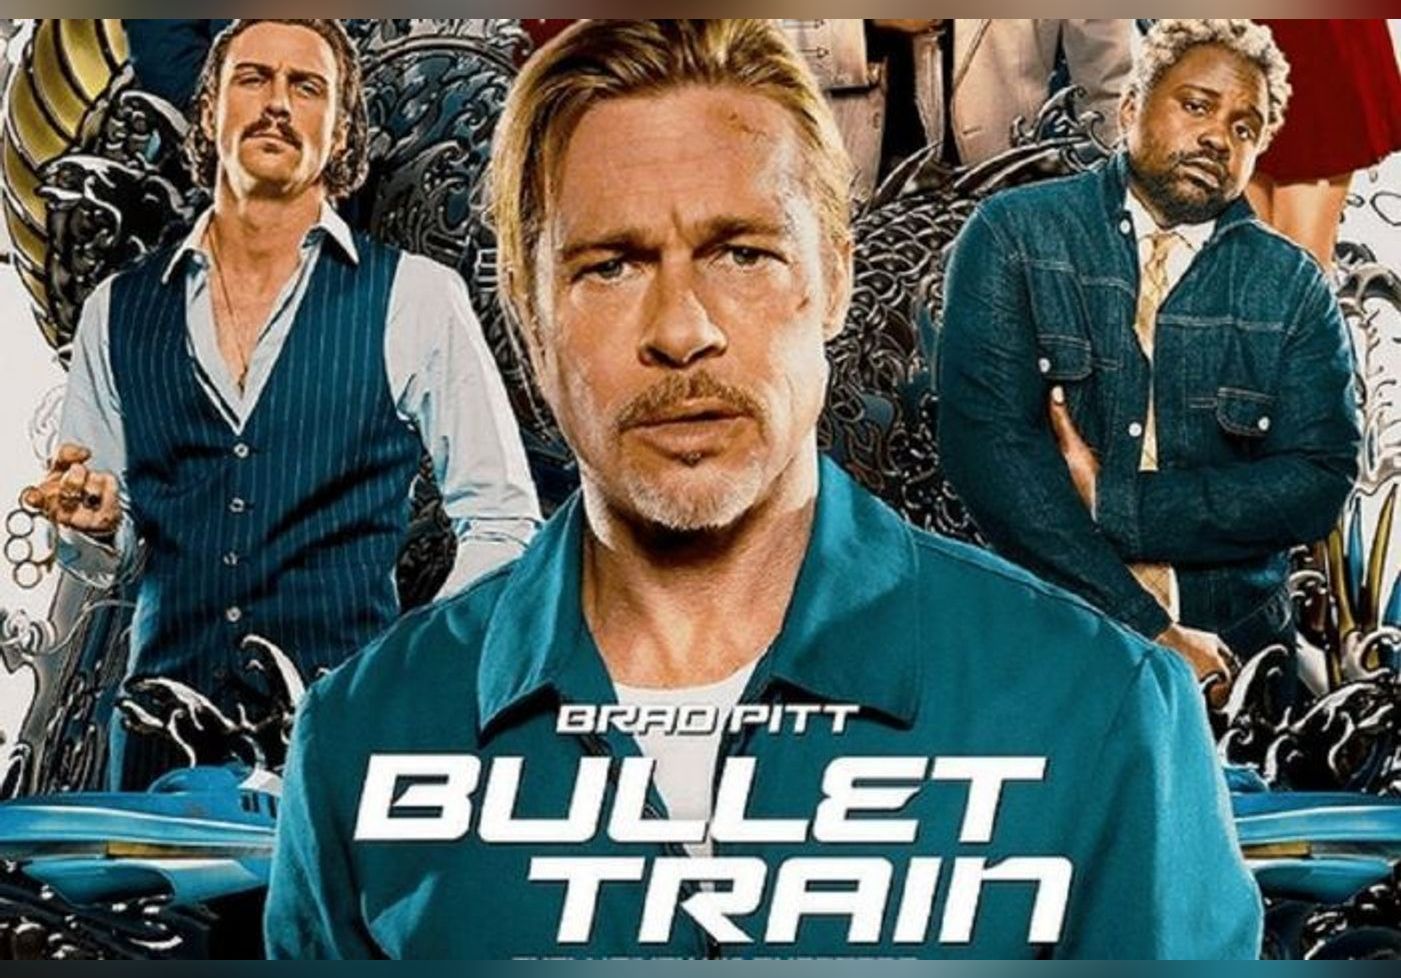 Bullet Train avec Brad Pitt - Critique du film